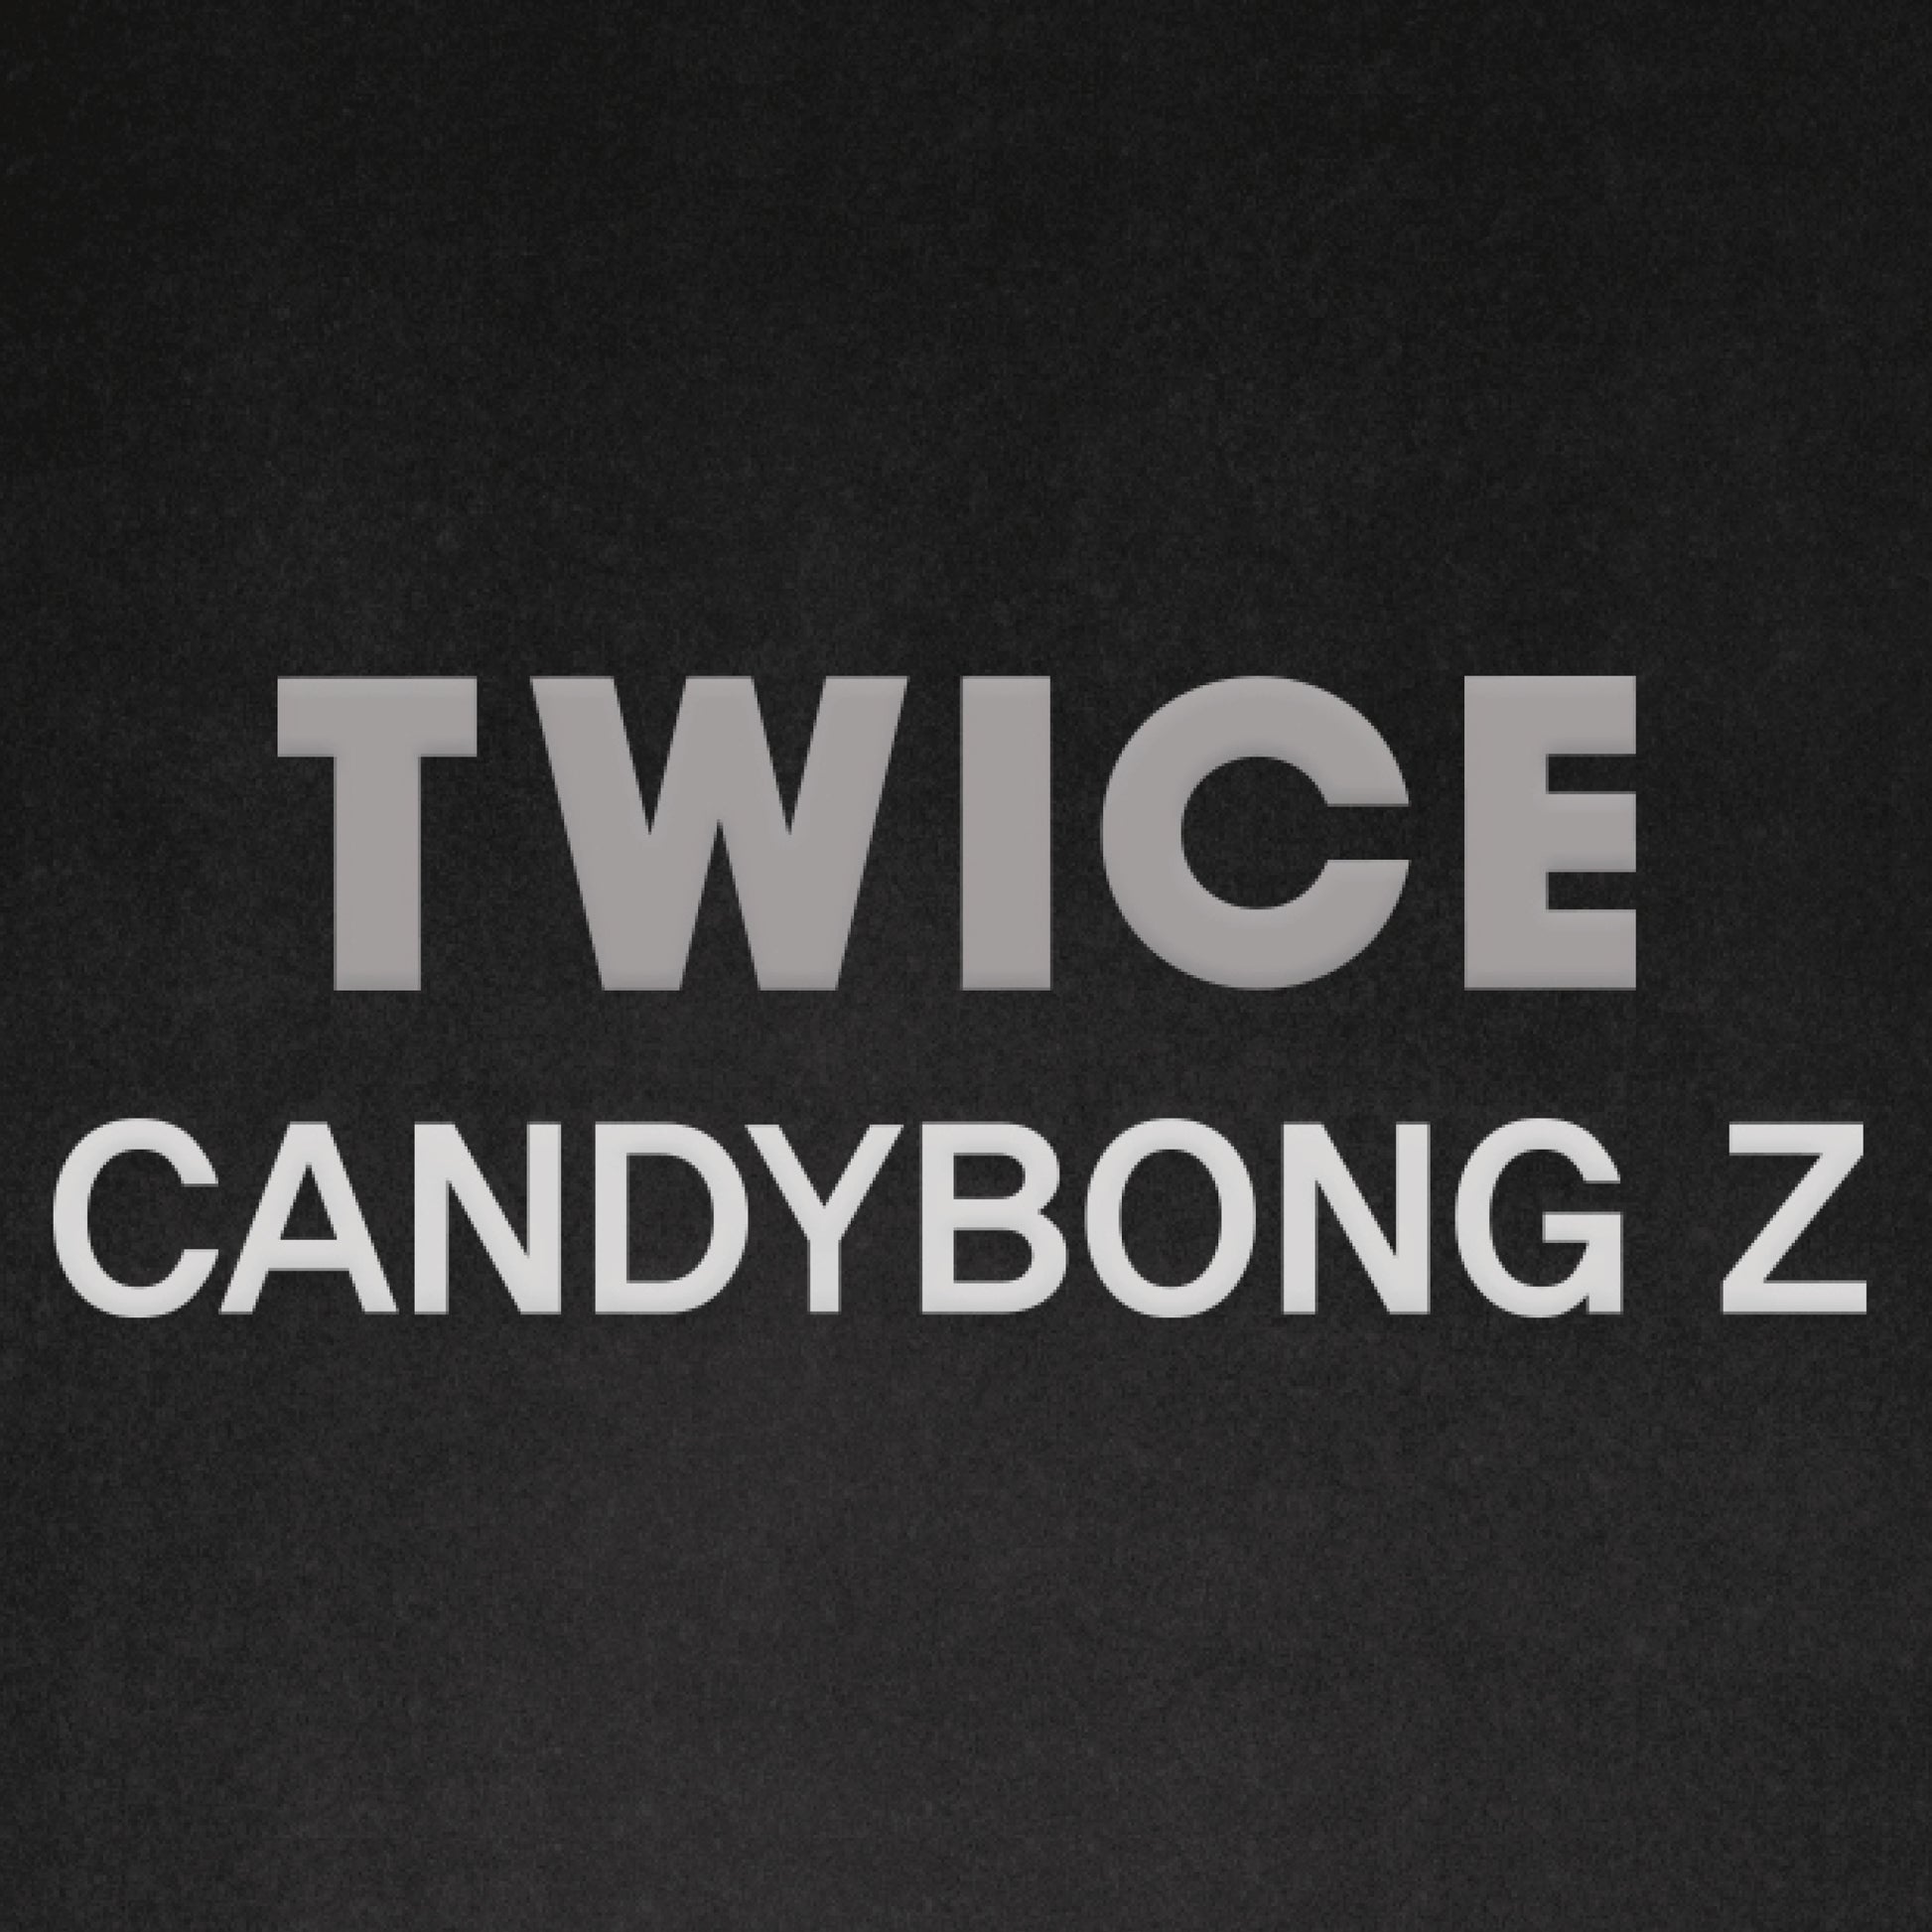 TWICE (트와이스) 3rd Generation Lightstick CANDYBONG ∞ Unboxing 